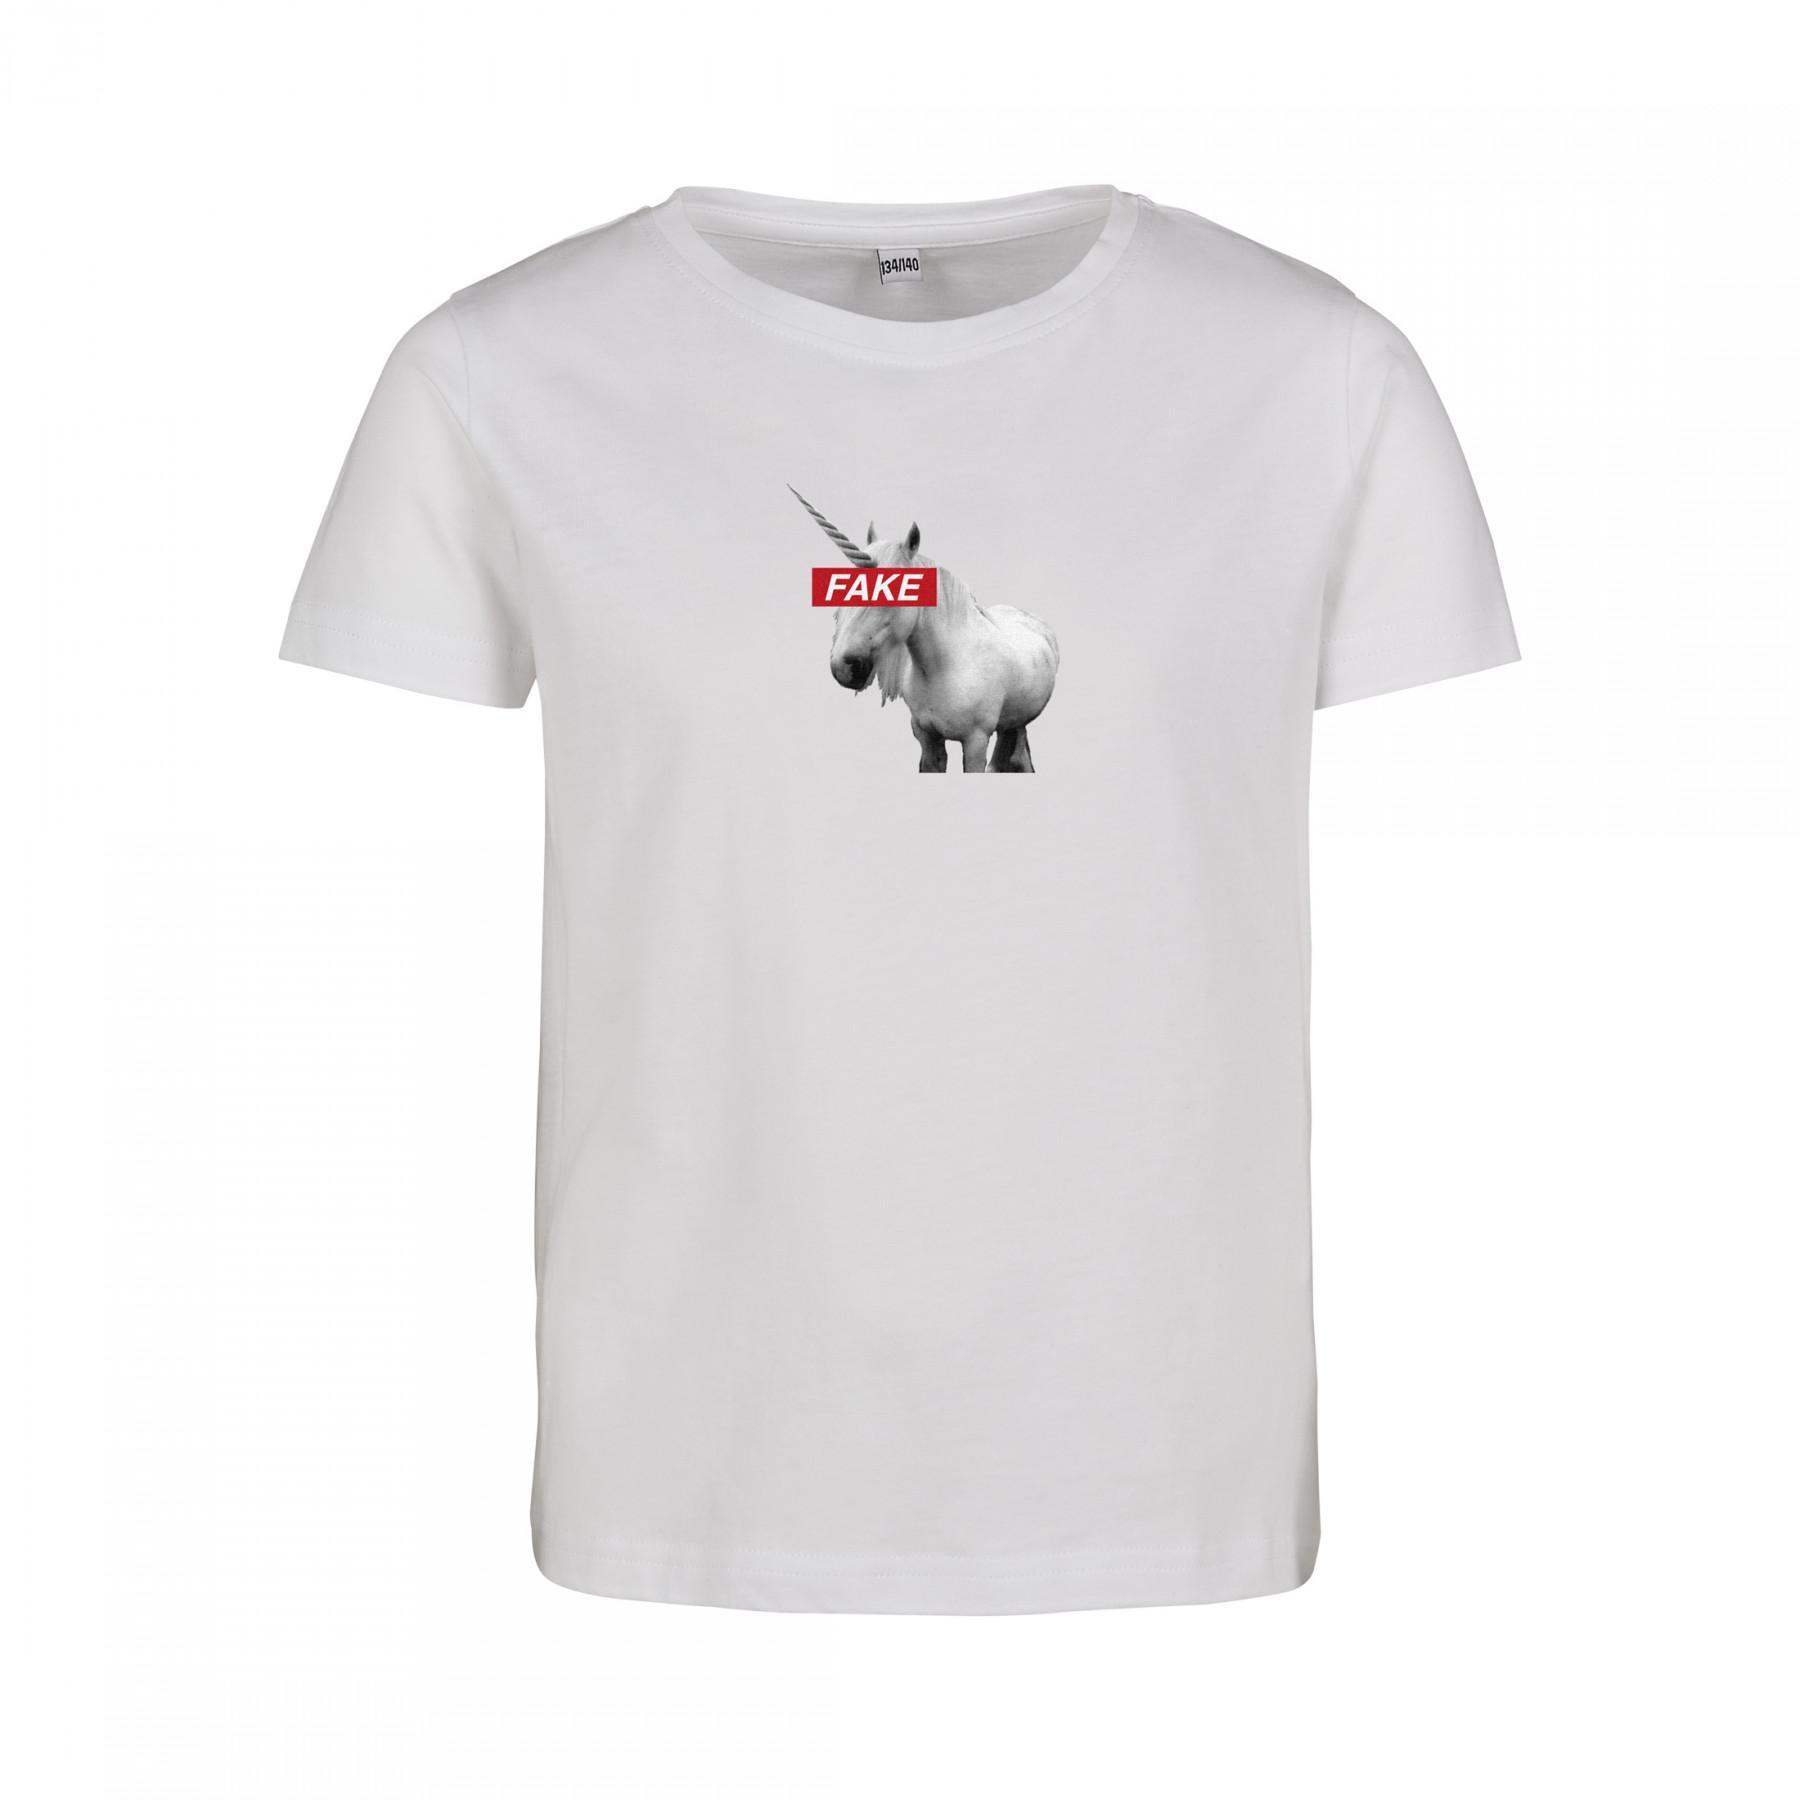 Kinder-T-shirt Mister Tee fake unicorn